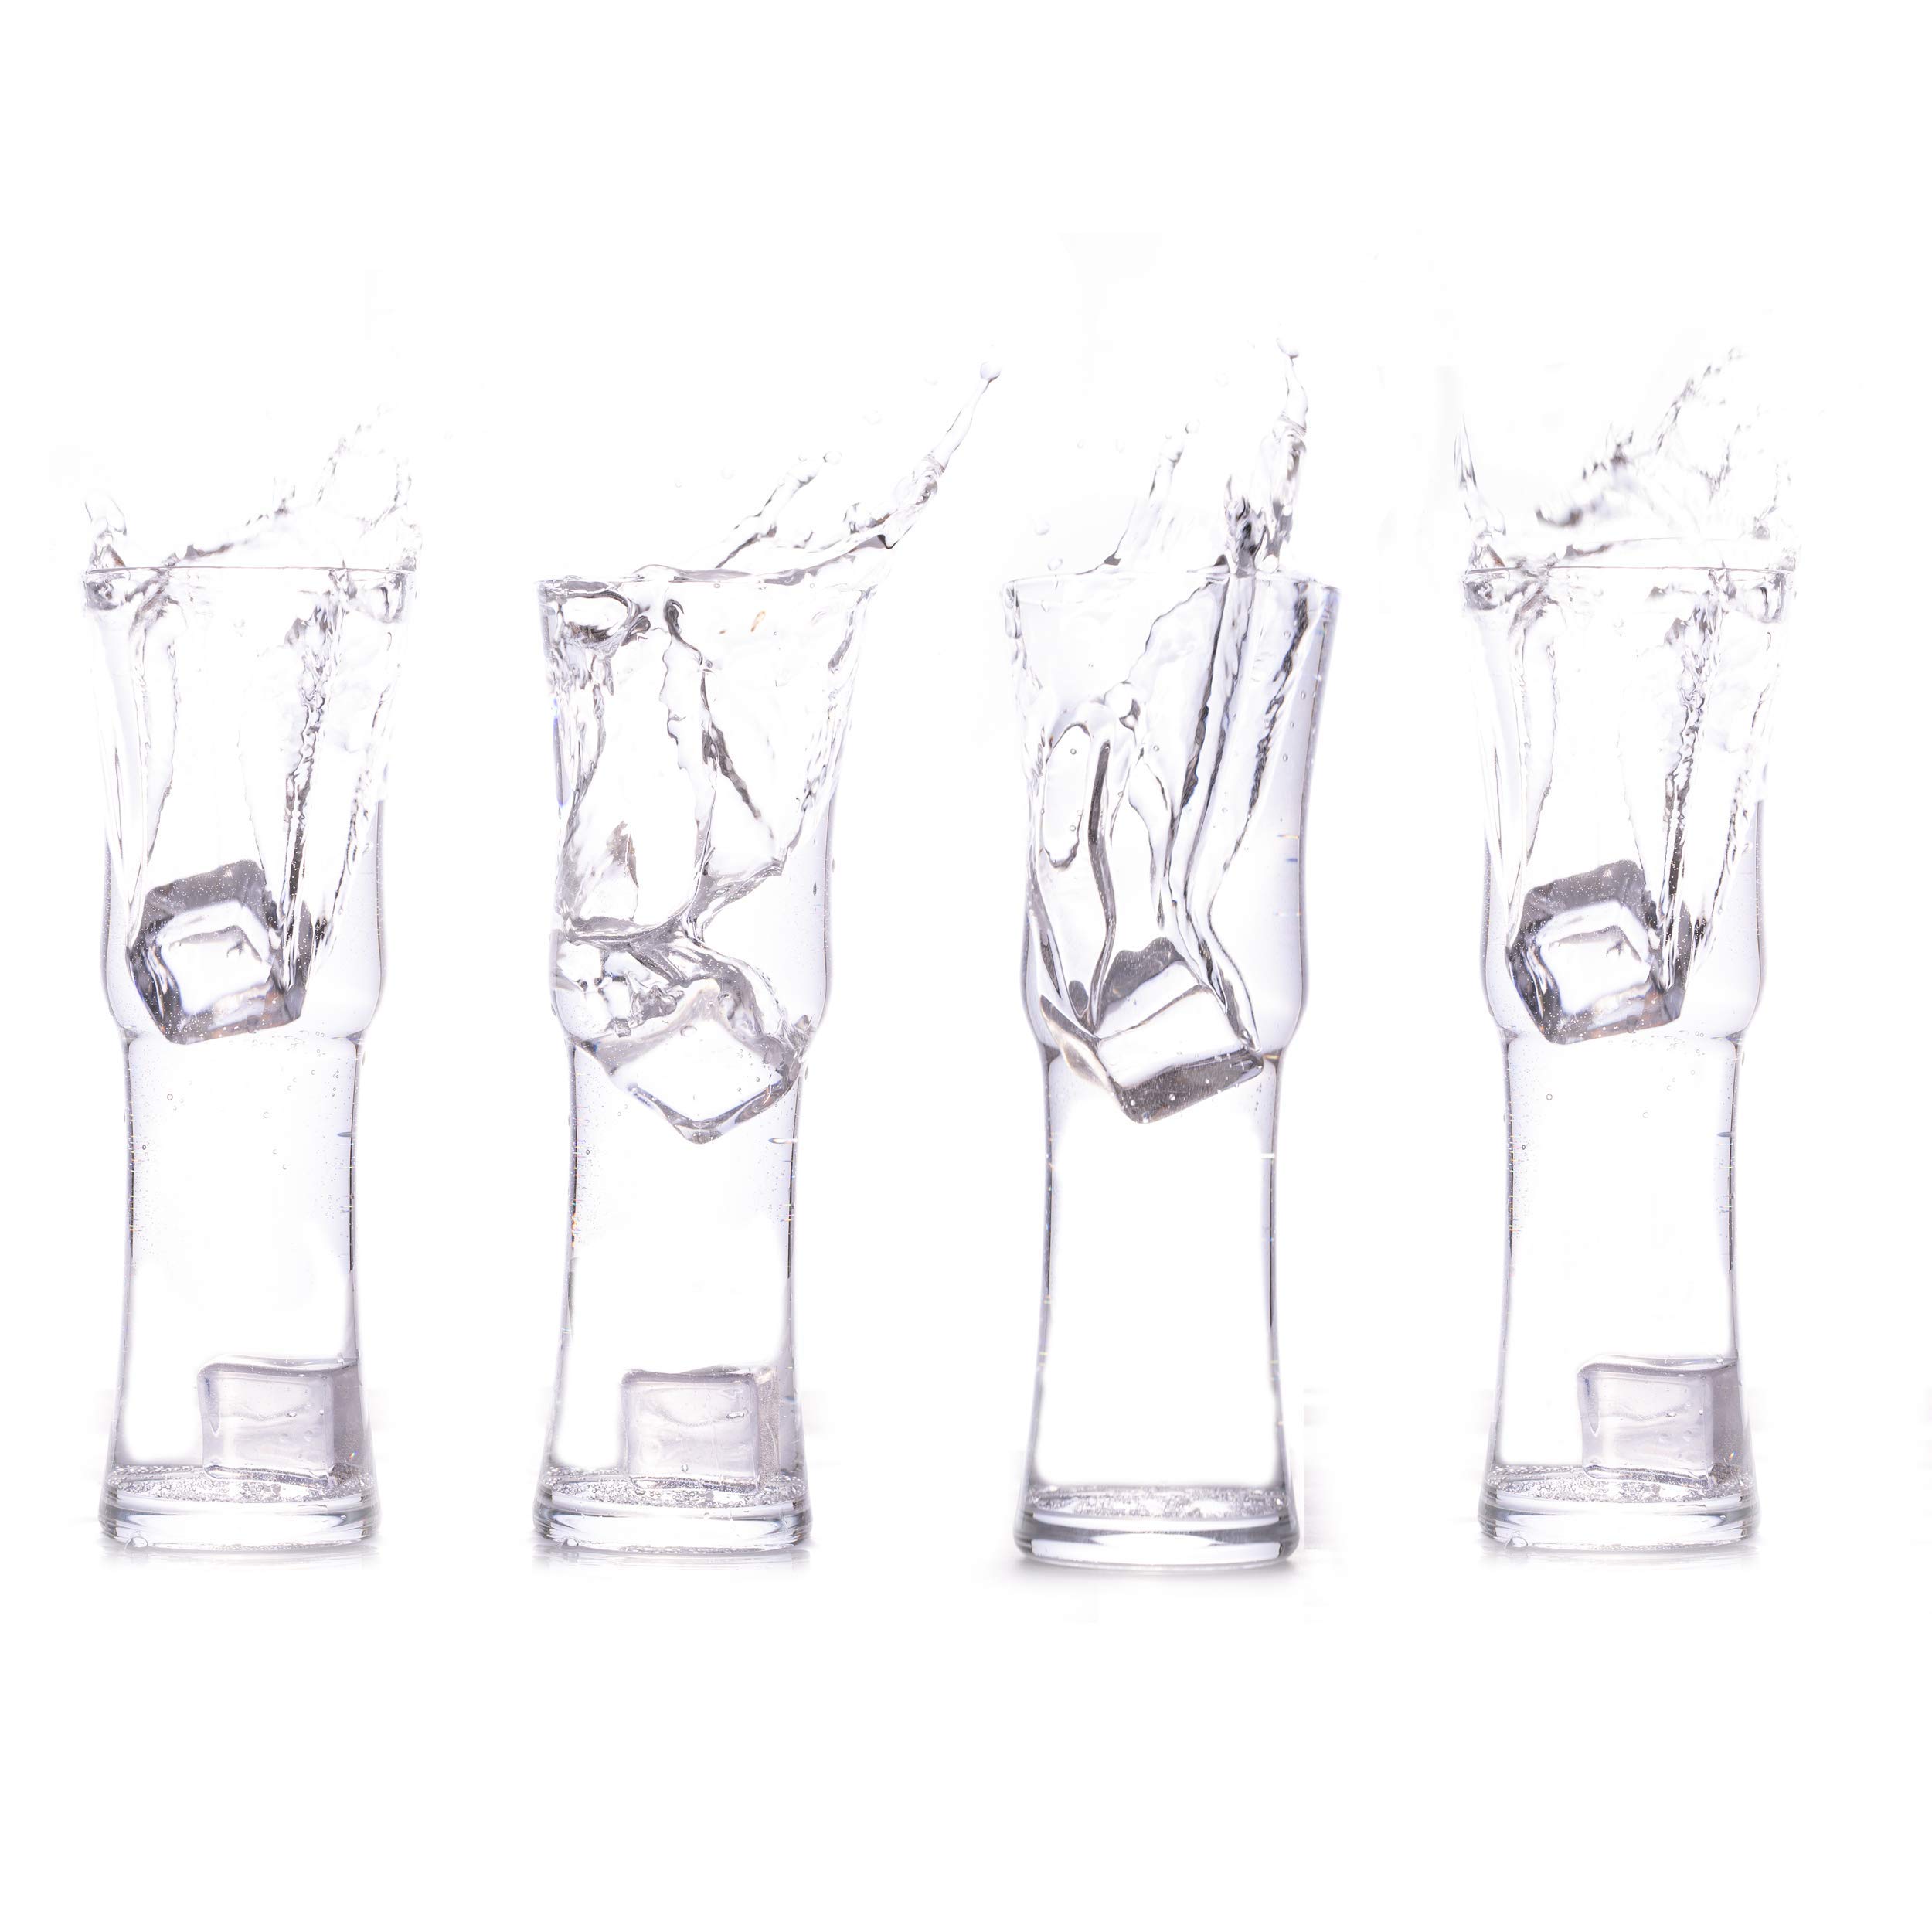 LEMONSODA Tall Cocktail Glasses Set of 4 - Highball Bar Glasses for Beer, Juice, Iced Tea - 15oz Liquor Glasses - Drink Tumbler Glass 4-Pack - Home Barware Alcohol Cups (4 Count (Pack of 1))